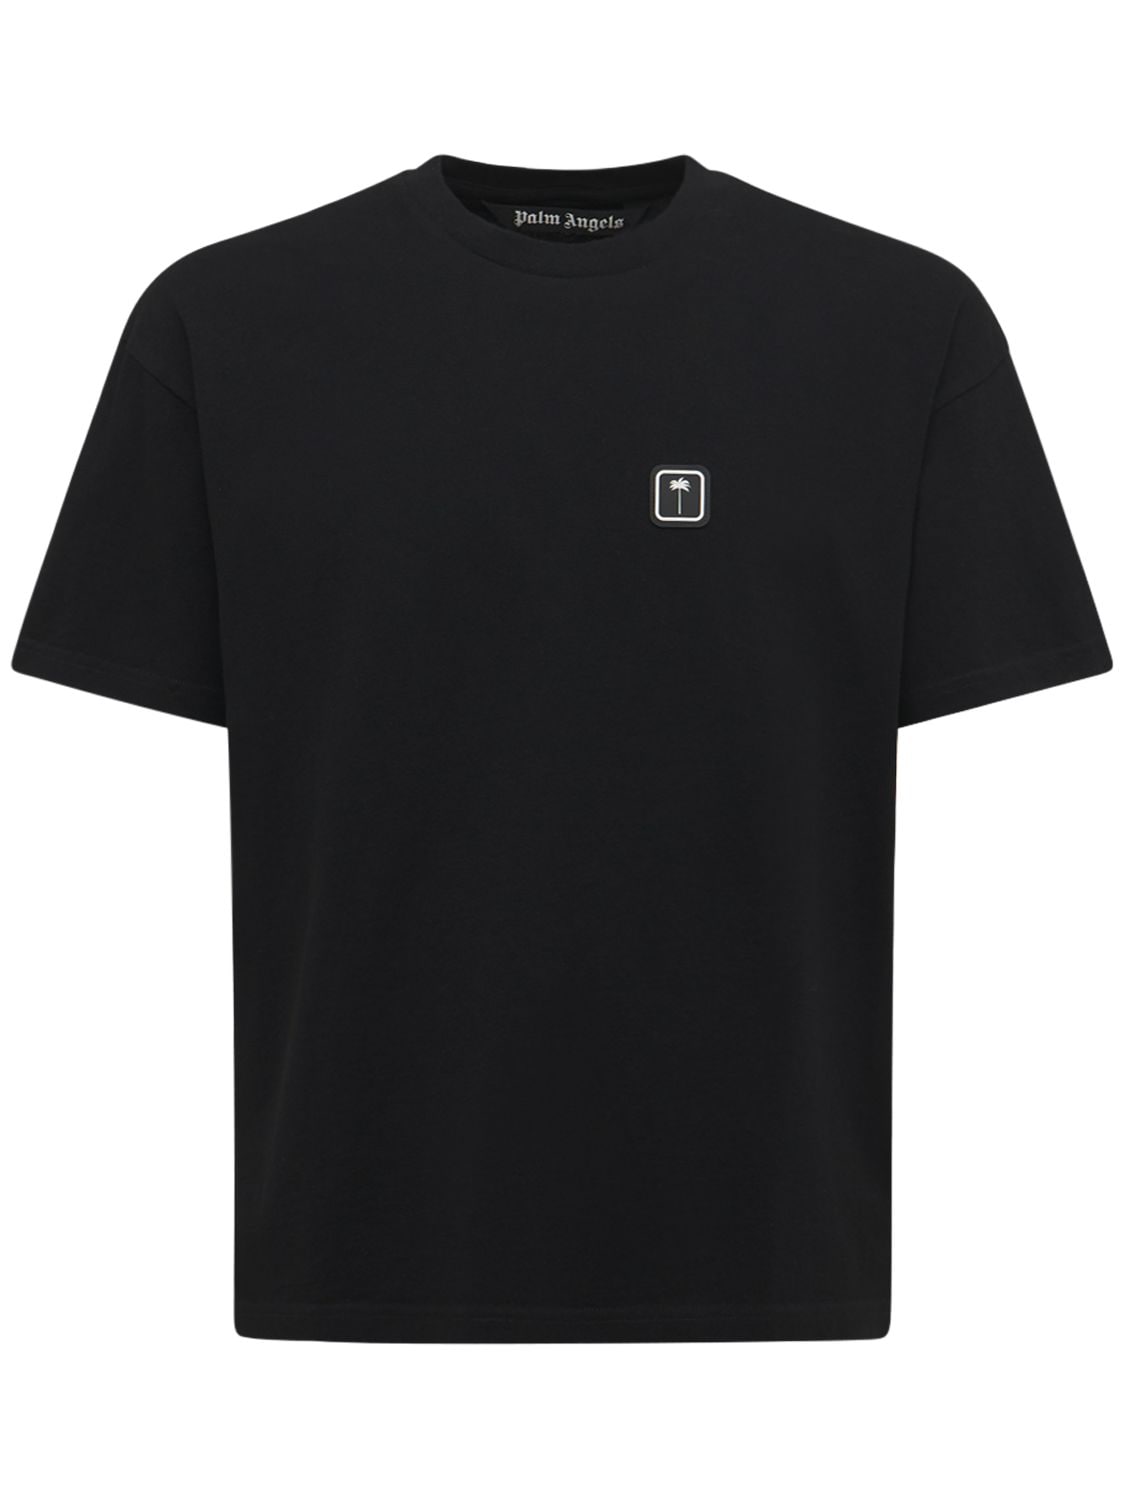 Palm Angels - Pxp classic cotton jersey t-shirt - Black/White ...